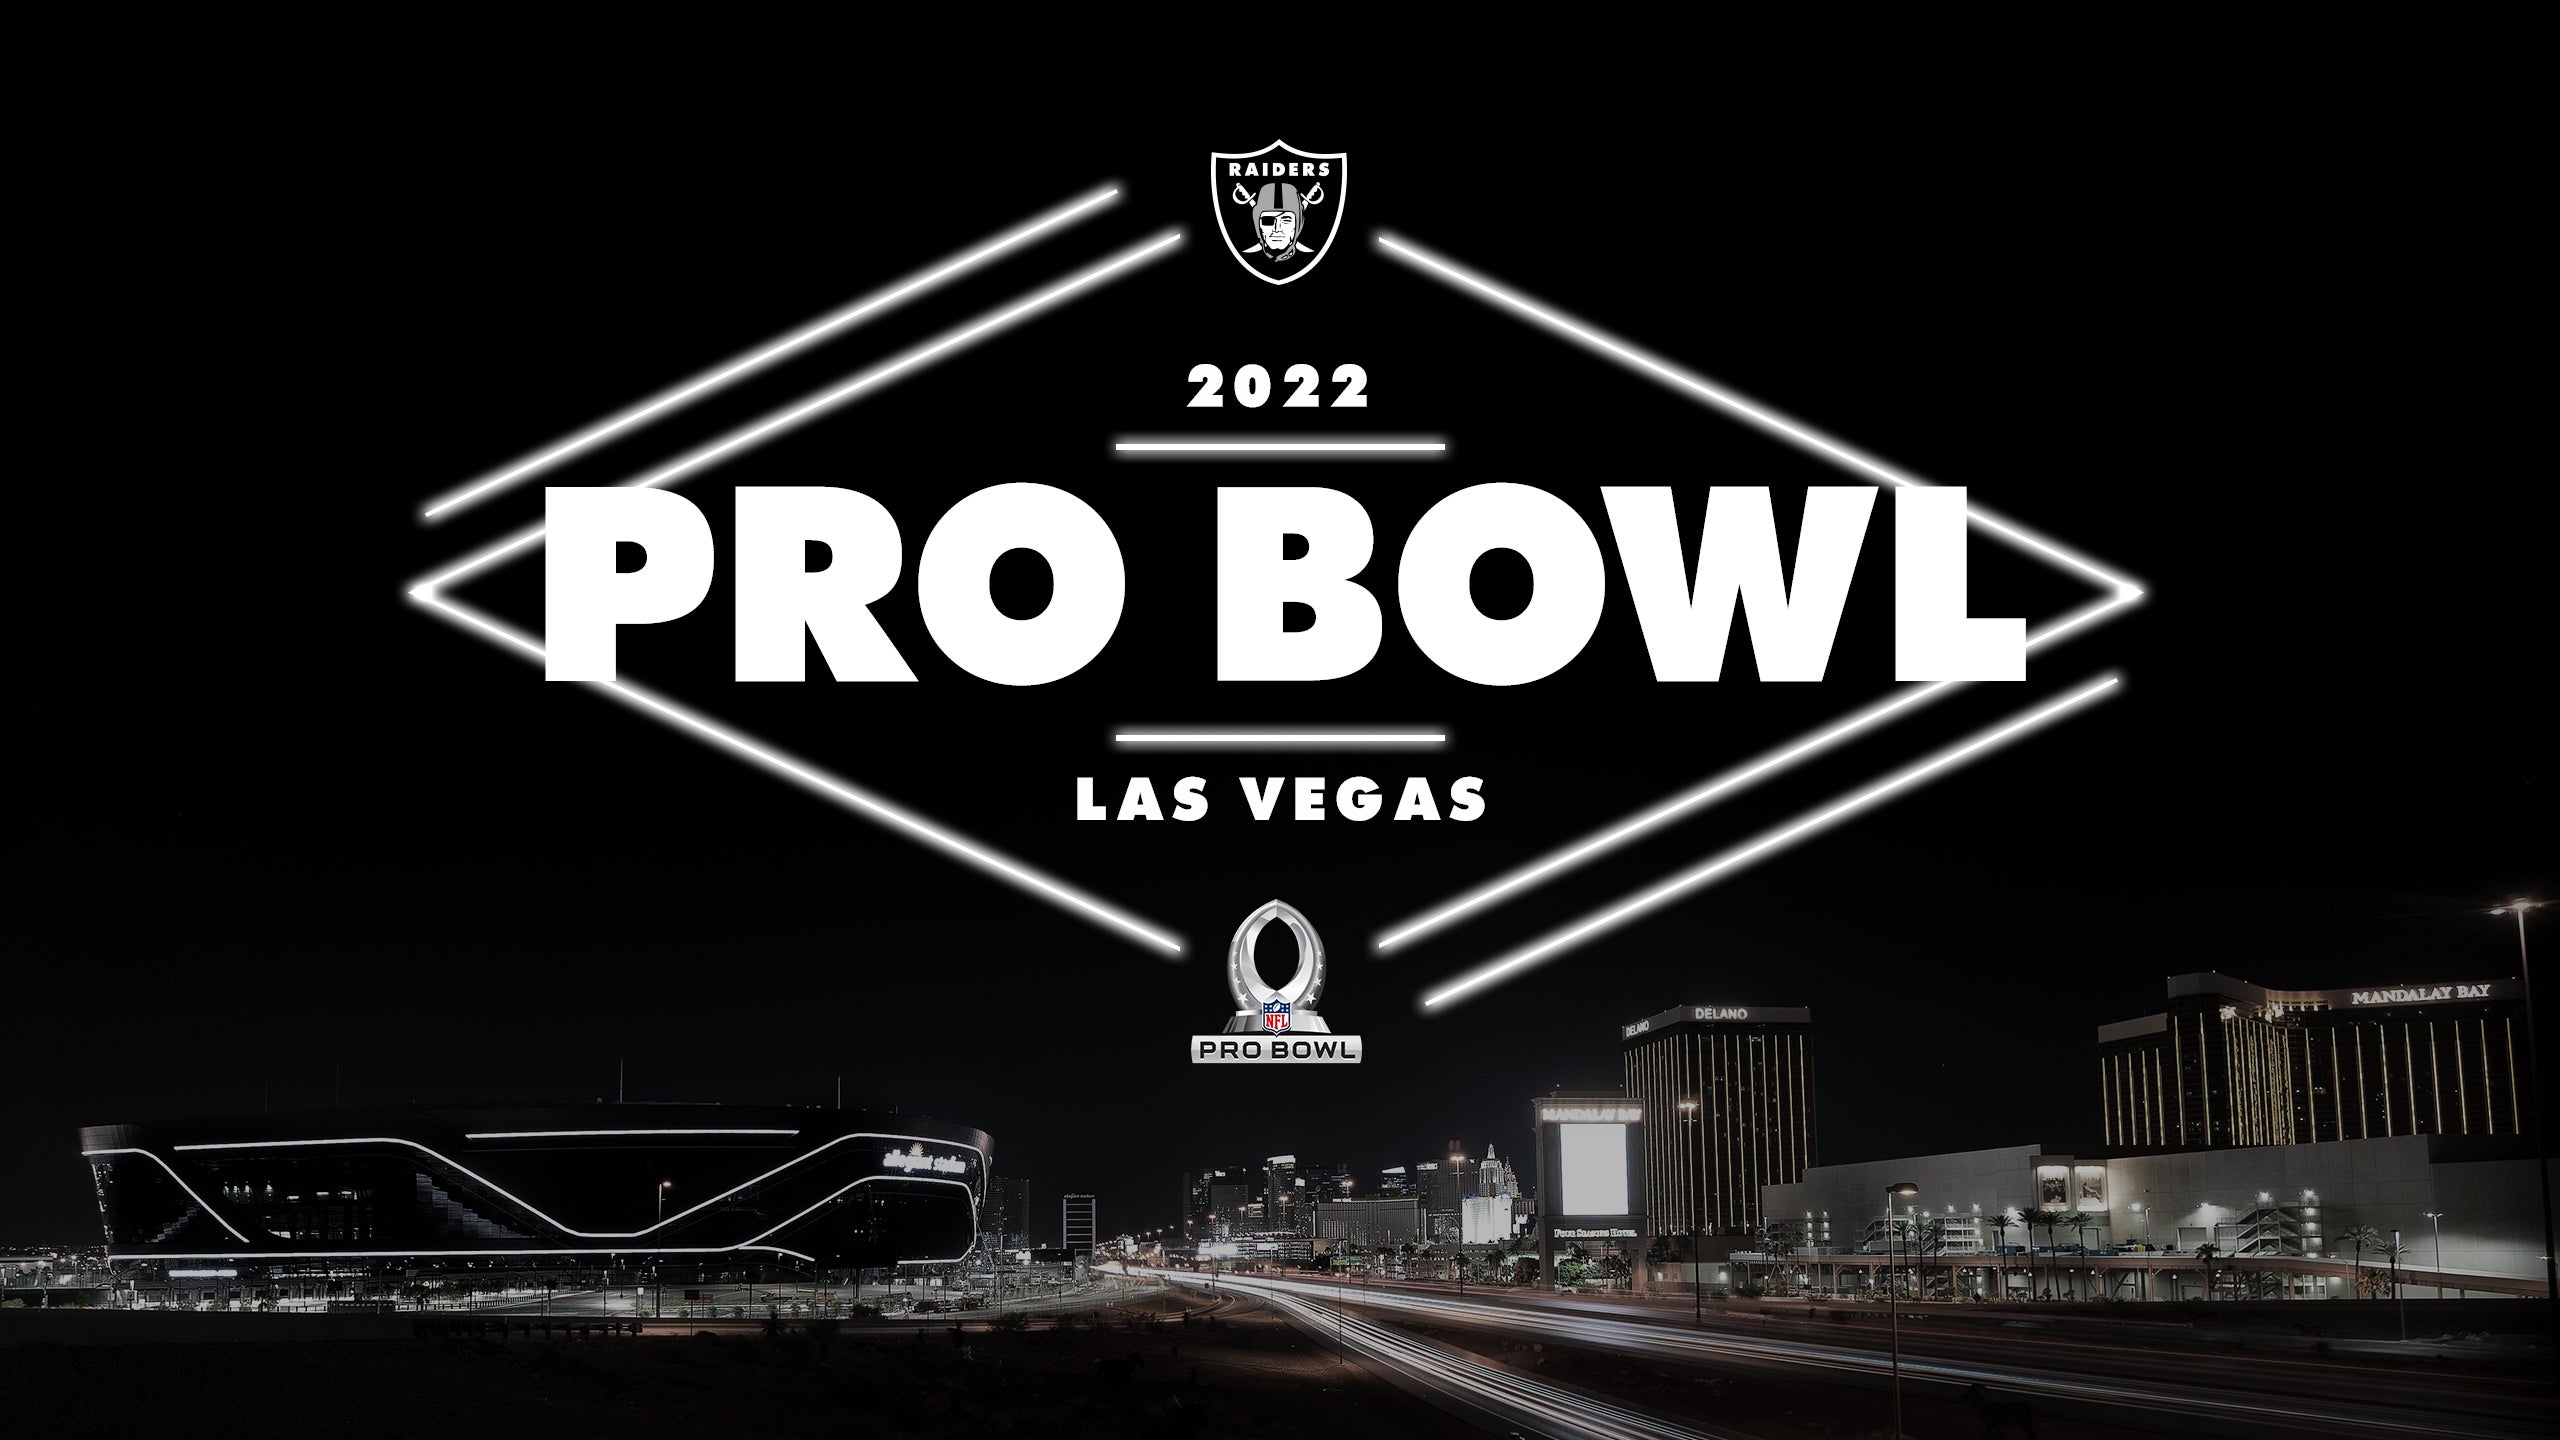 2022 Pro Bowl in Las Vegas